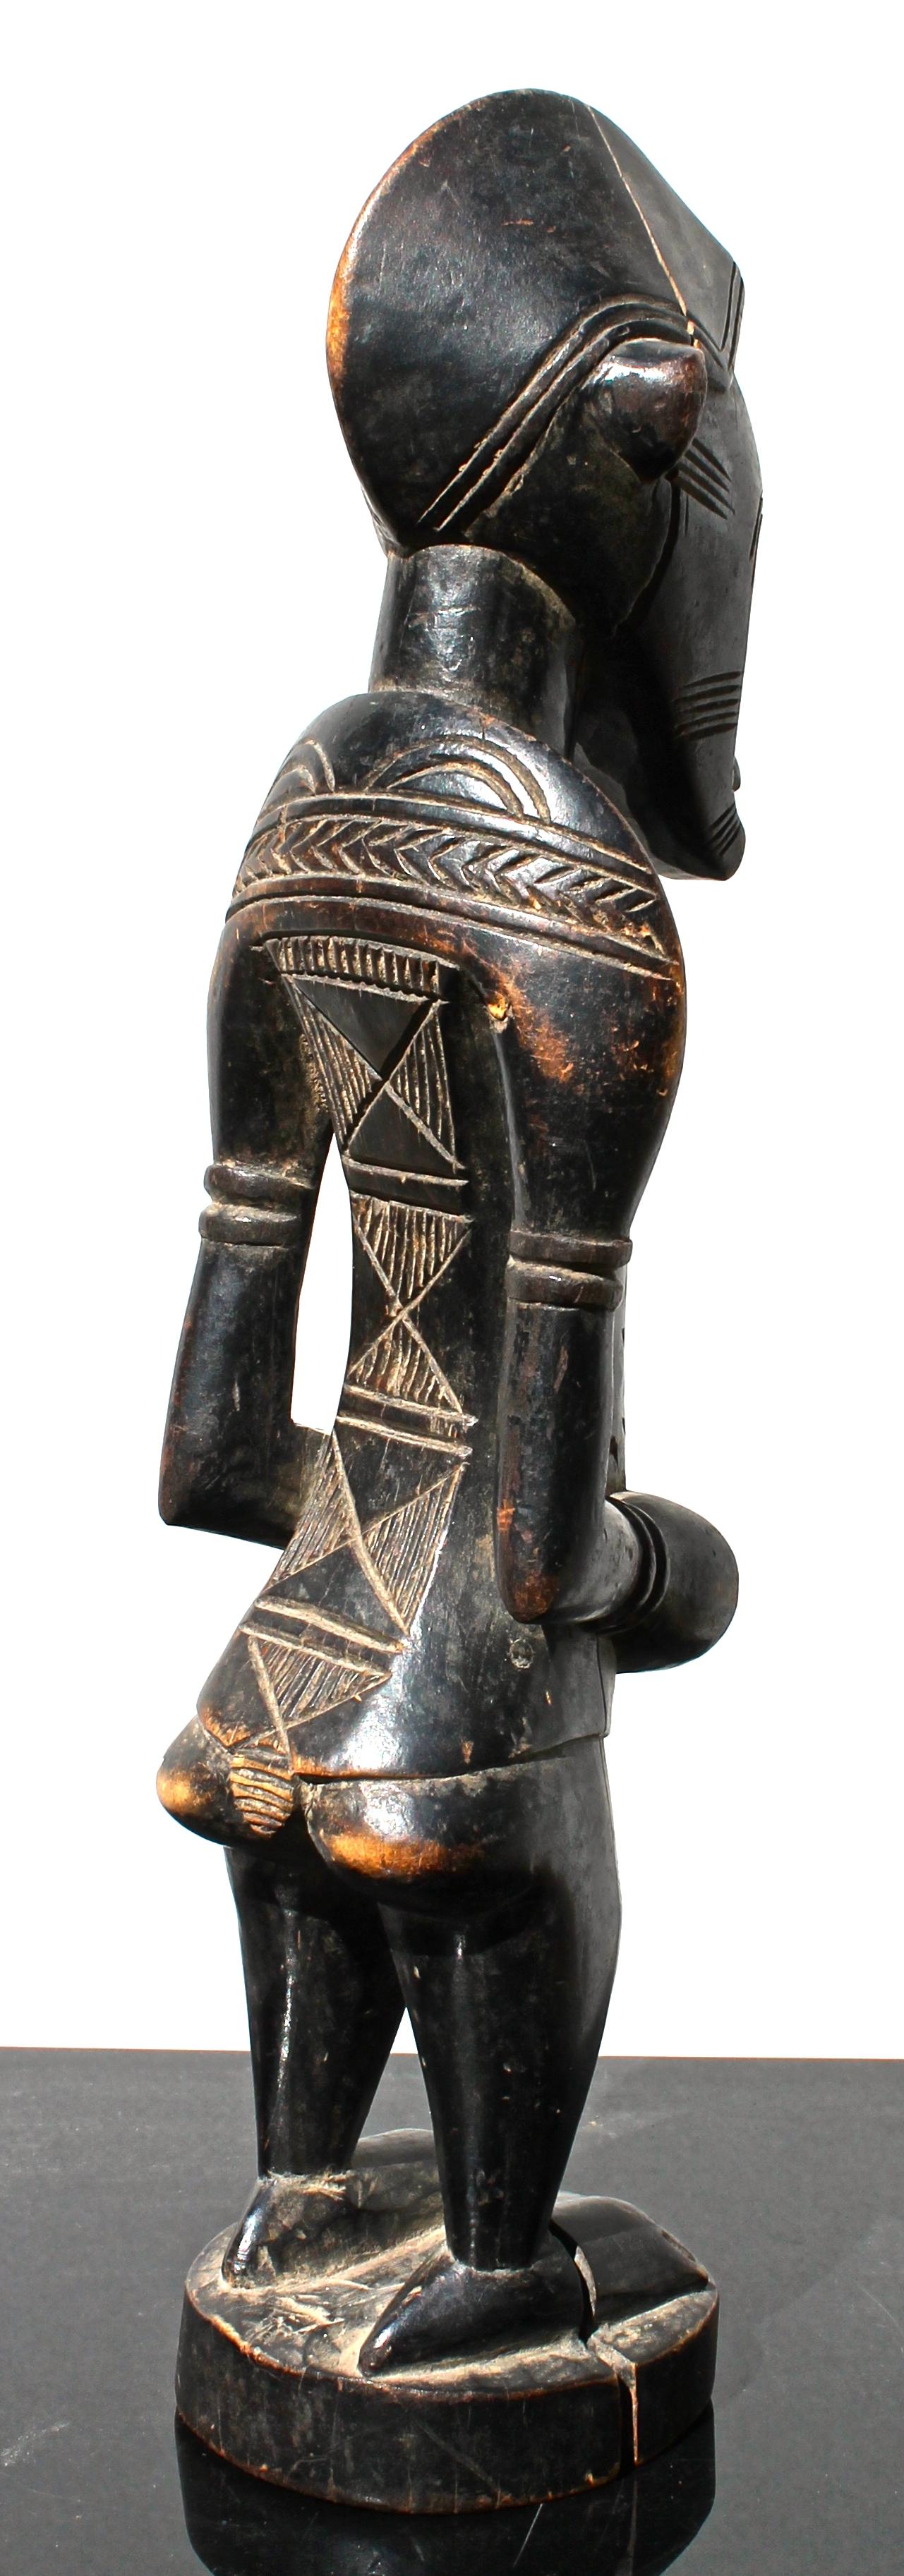 Carved Senufo Figure African Sculpture For Sale